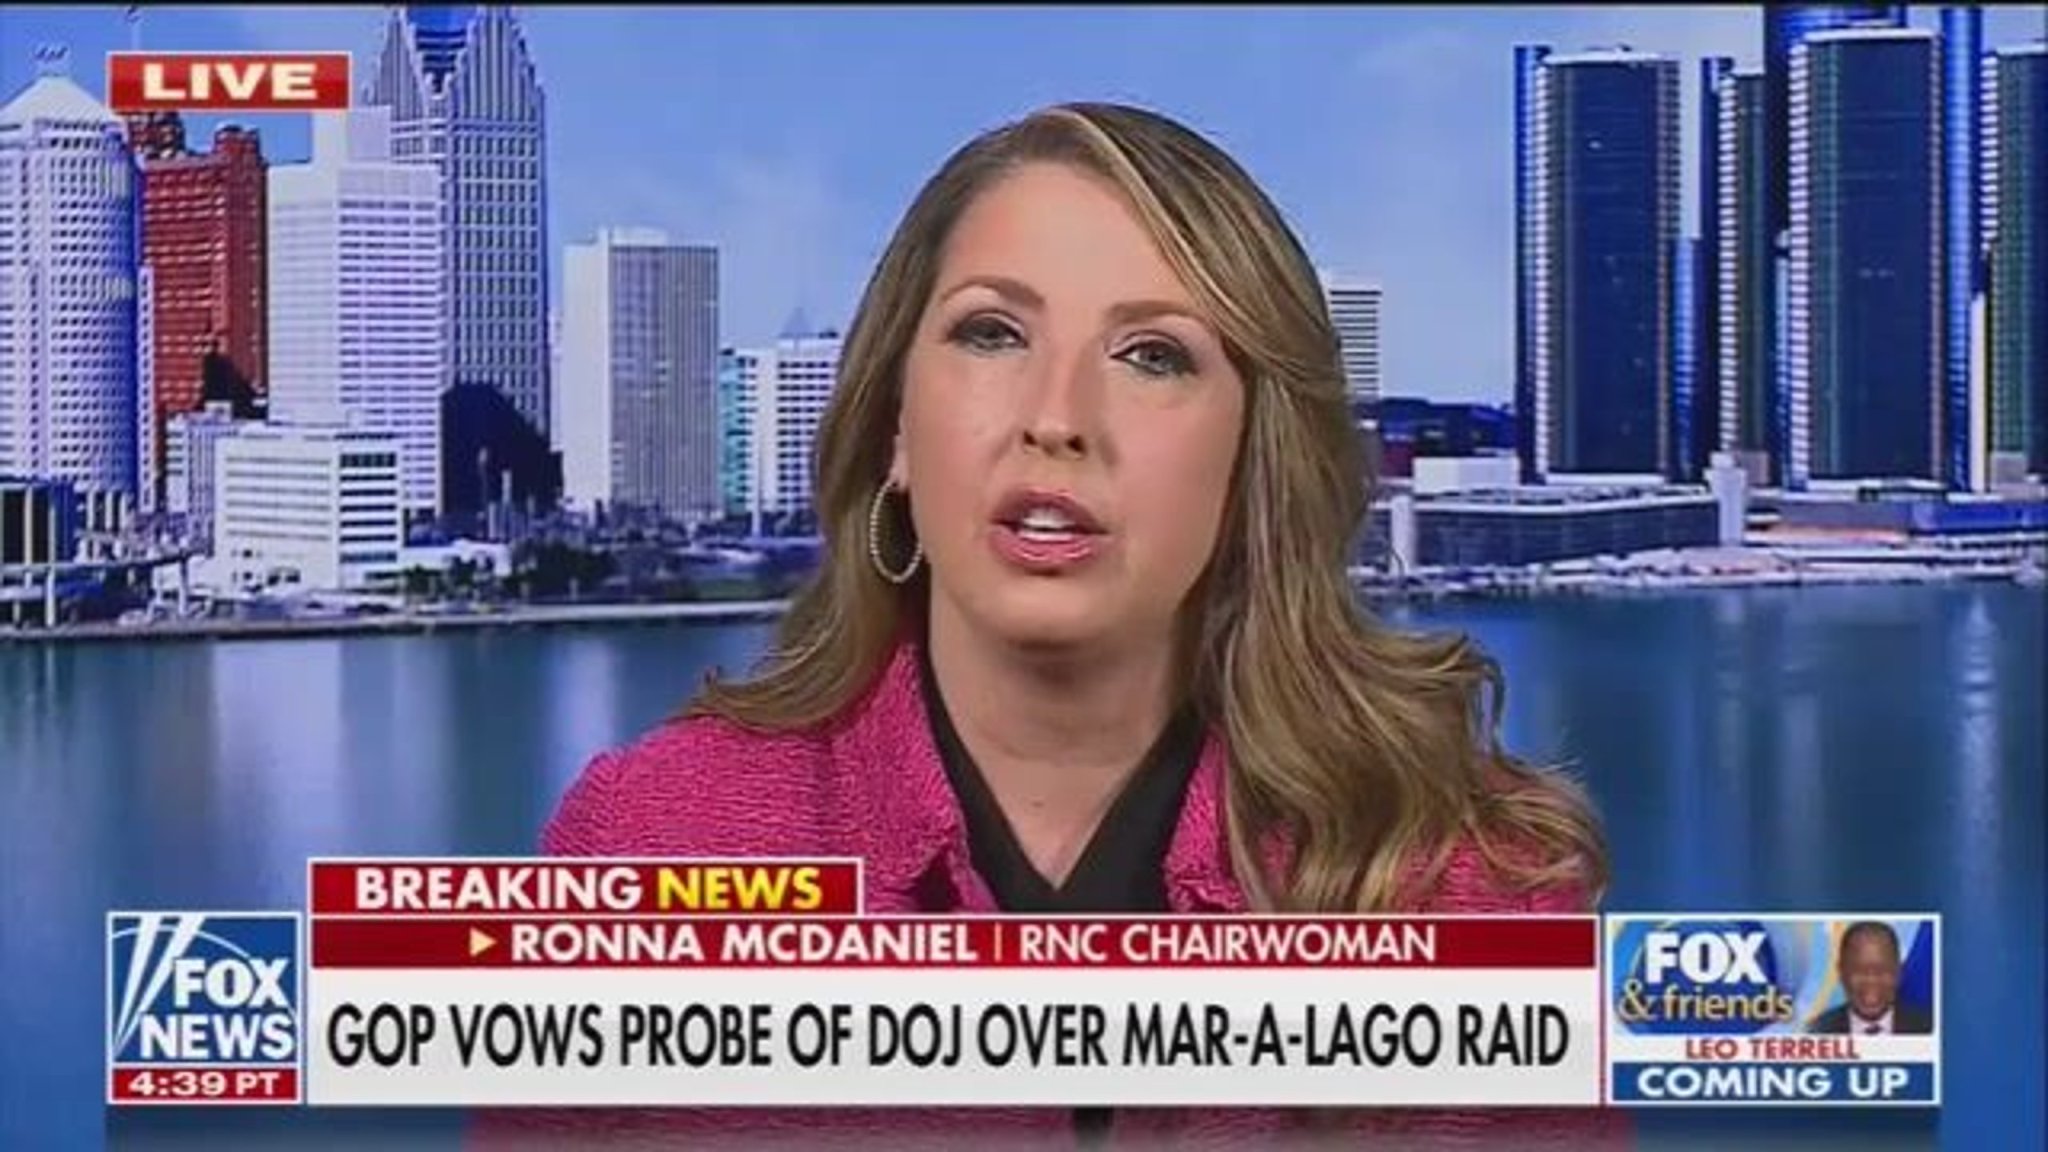 RNC Chairwoman Ronna McDaniel defends Trump’s absurd claims after the FBI raided Mar-a-Lago.